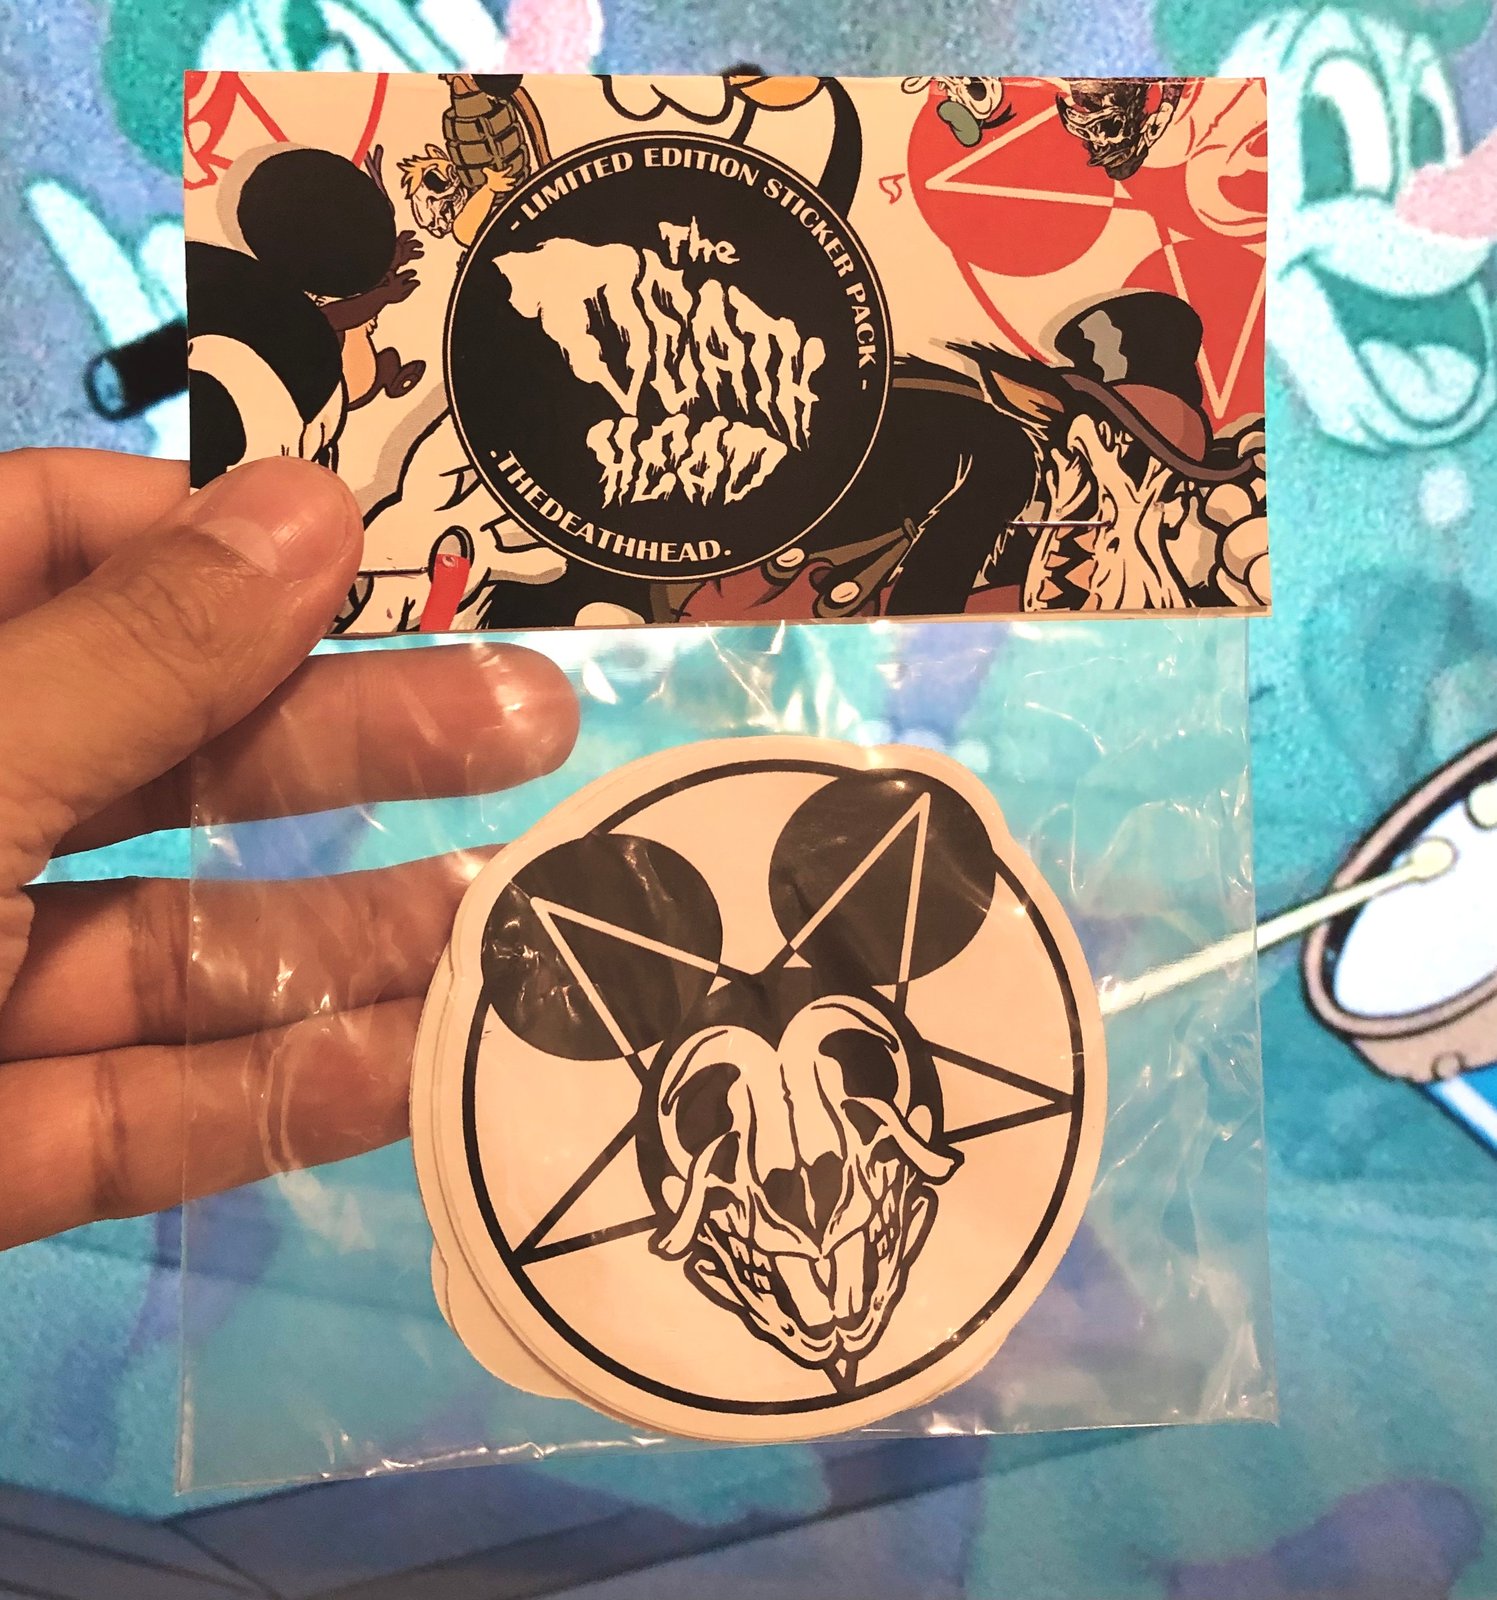 Re:Zero - SLAP Stickers - Anime Vinyl Car Stickers | eBay